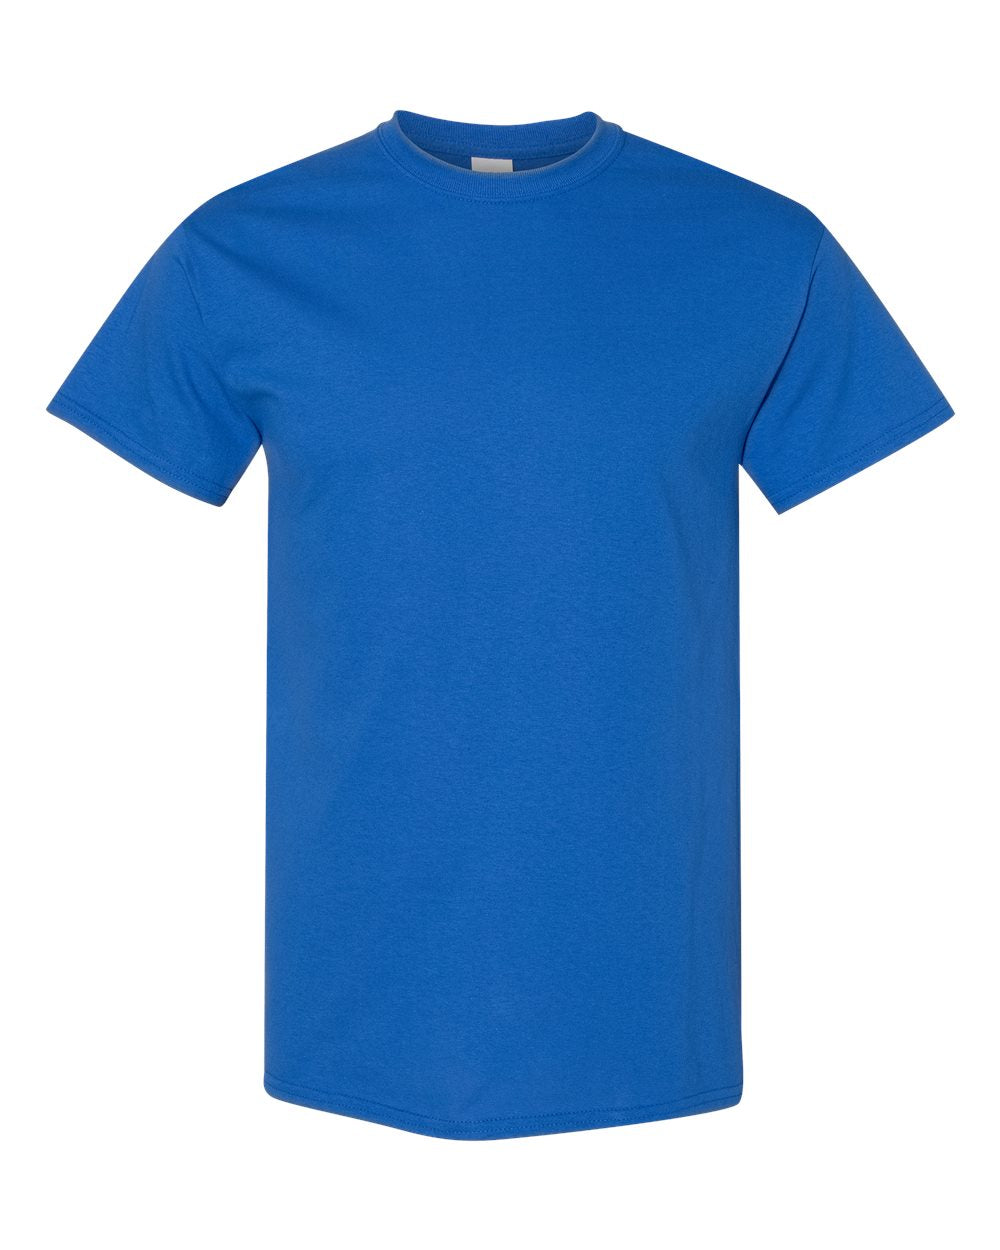 Unisex Short Sleeve Cotton T-shirt 5000